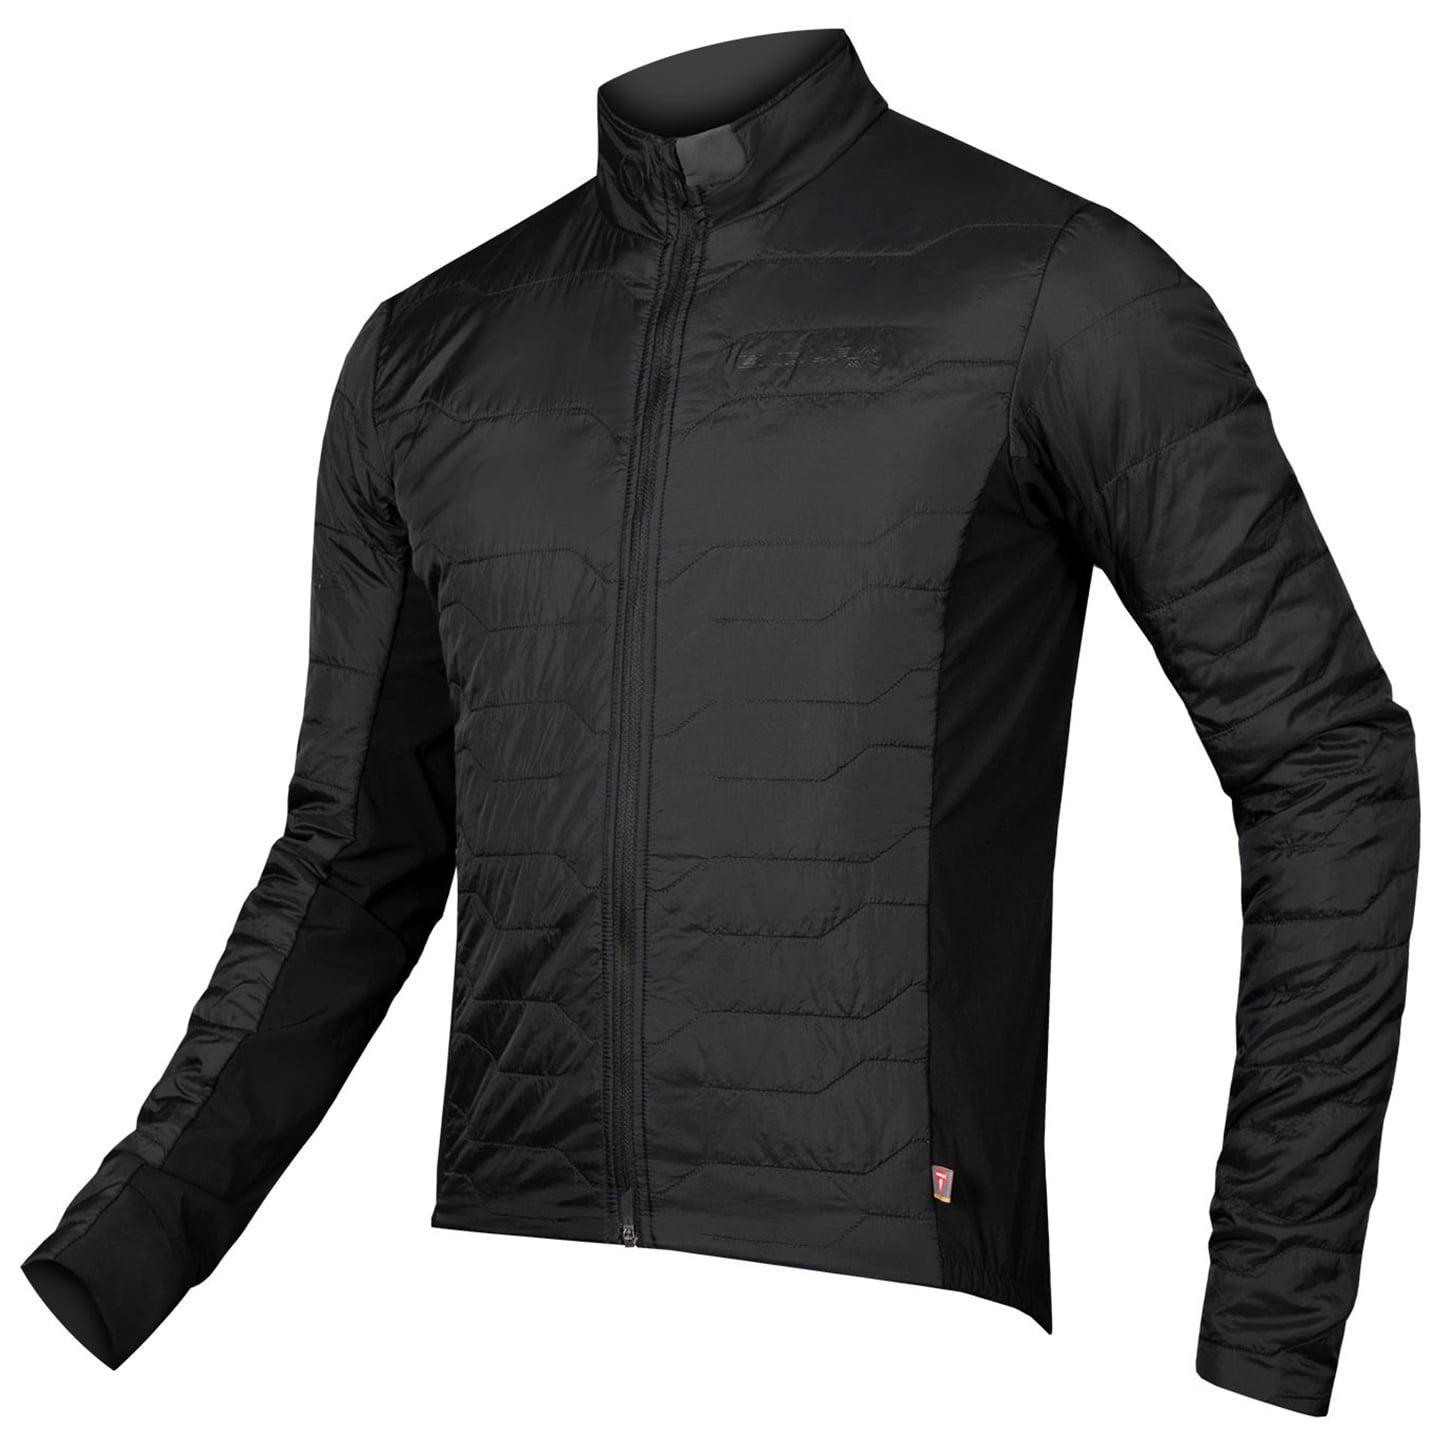 ENDURA Winter Jacket Pro SL Primaloft II Thermal Jacket, for men, size 2XL, Winter jacket, Cycling clothing